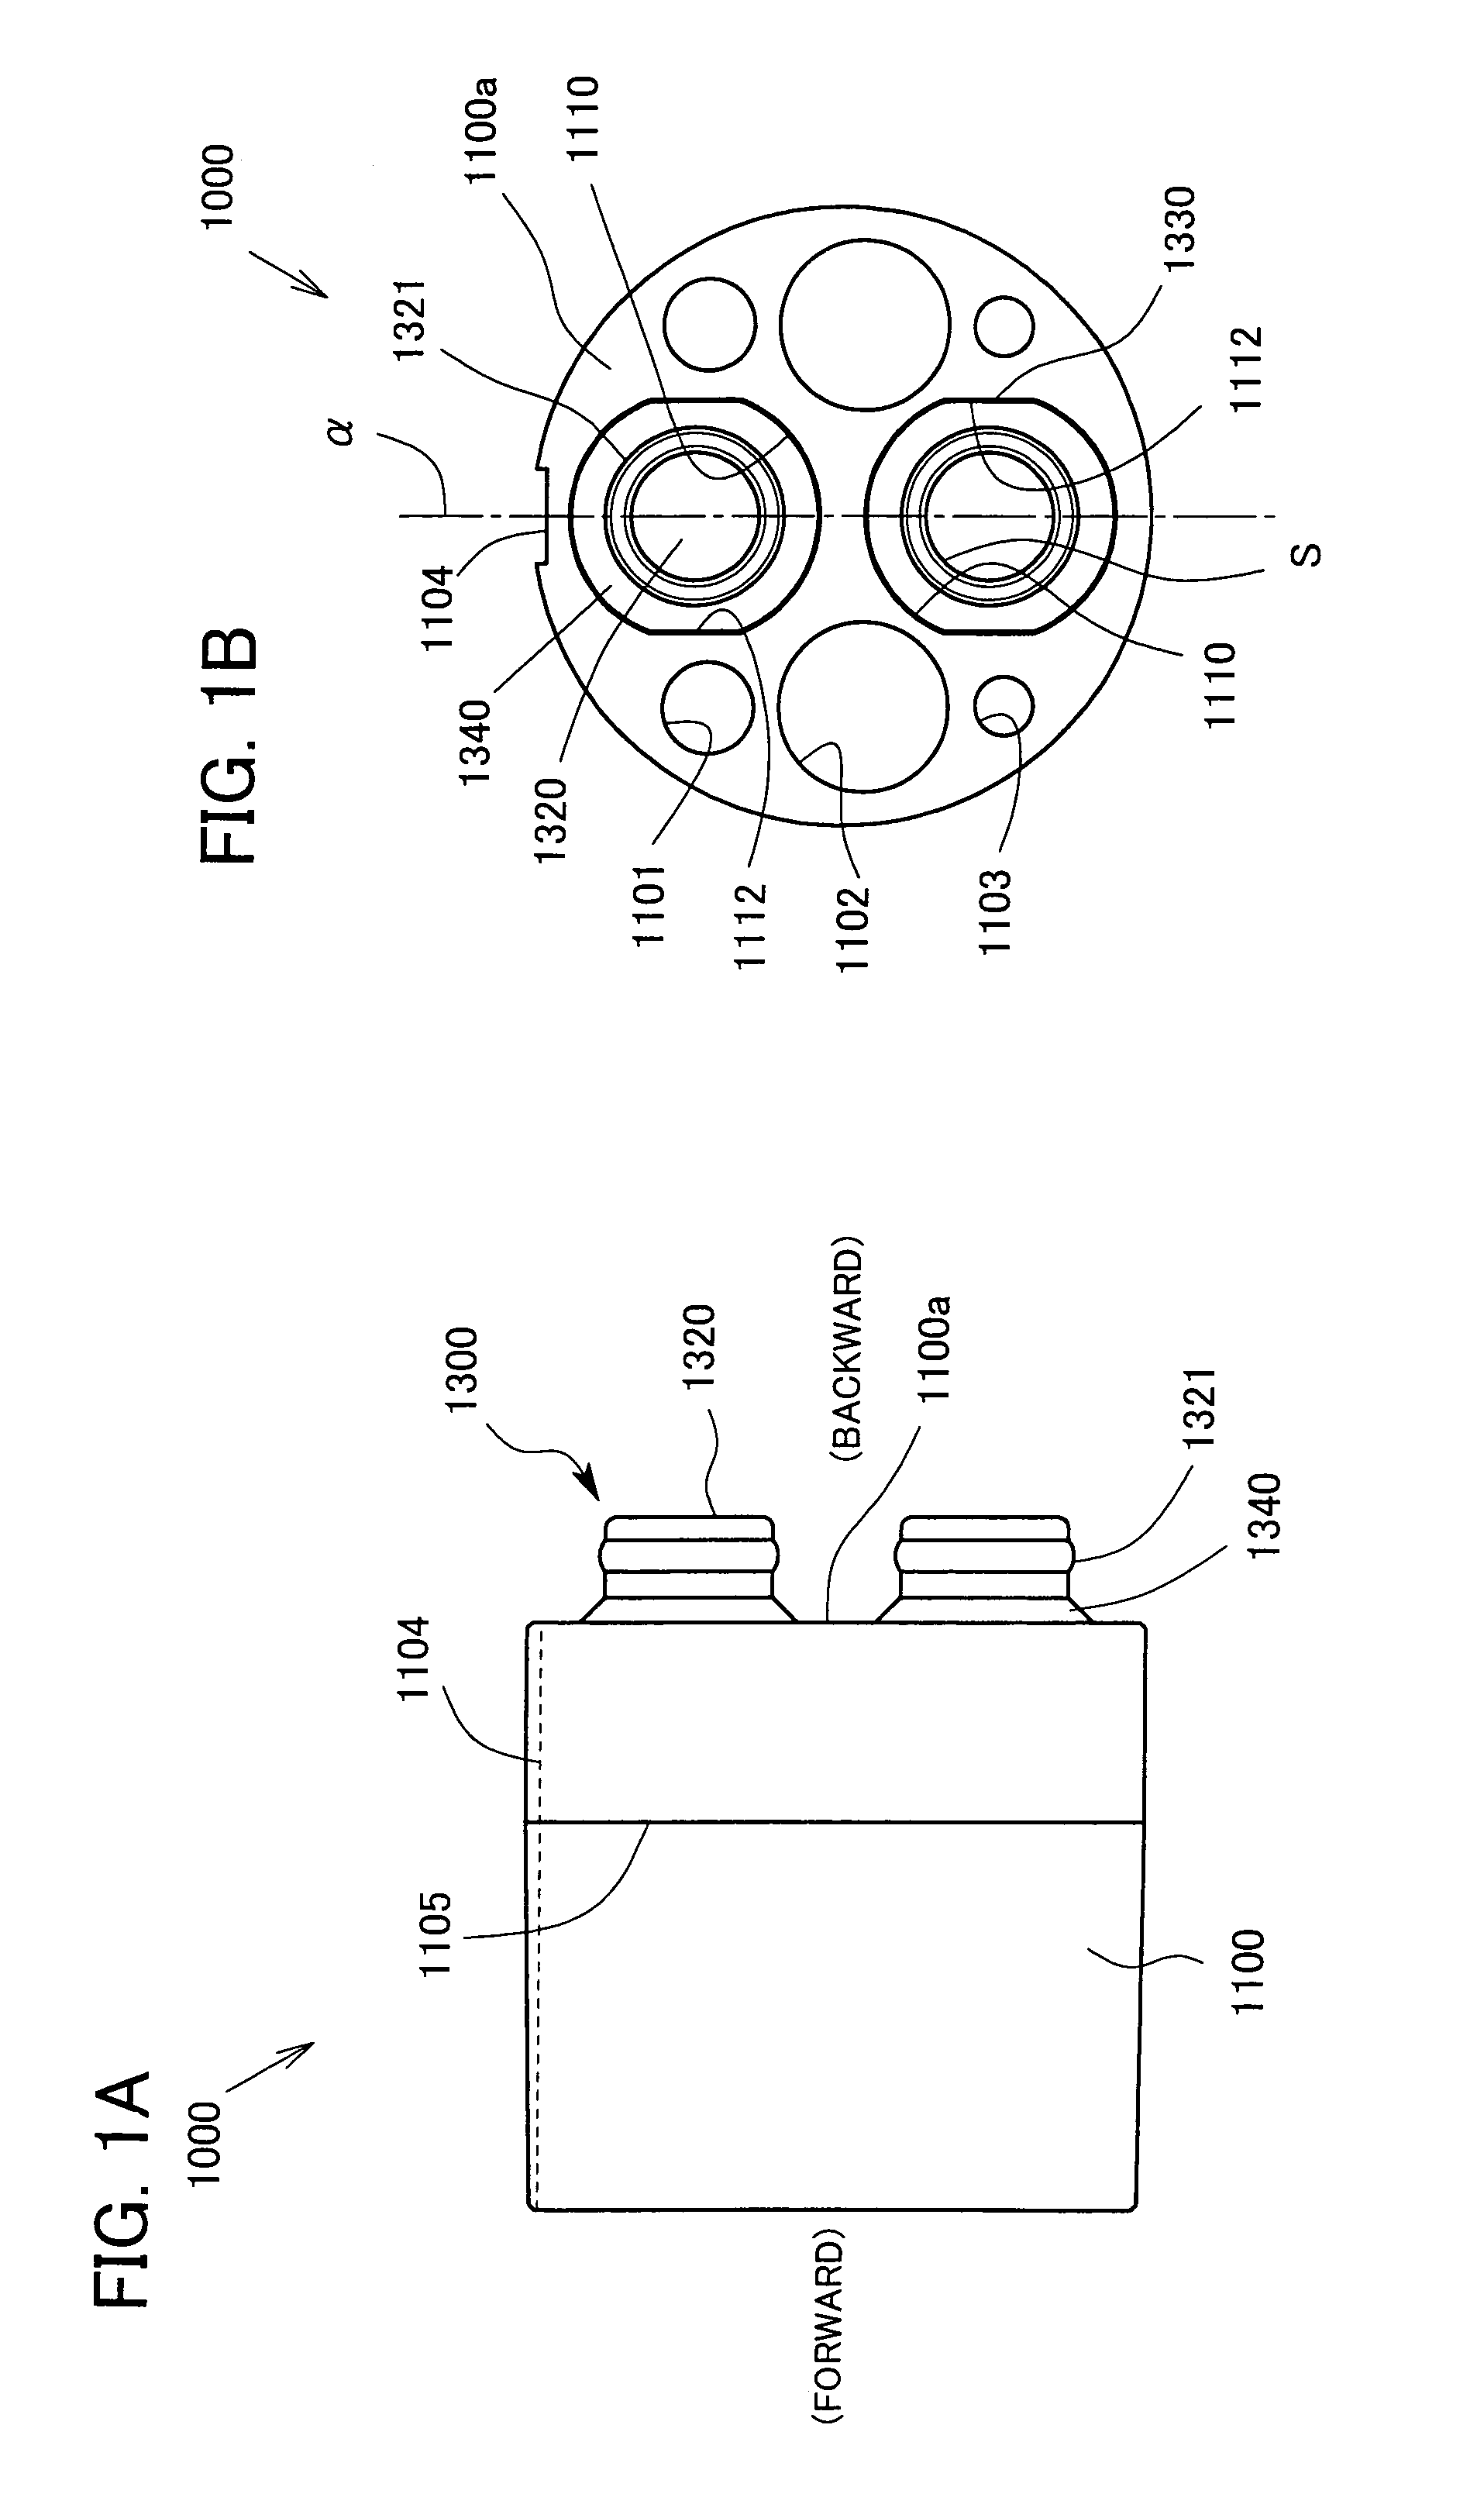 Adaptor unit and optical plug